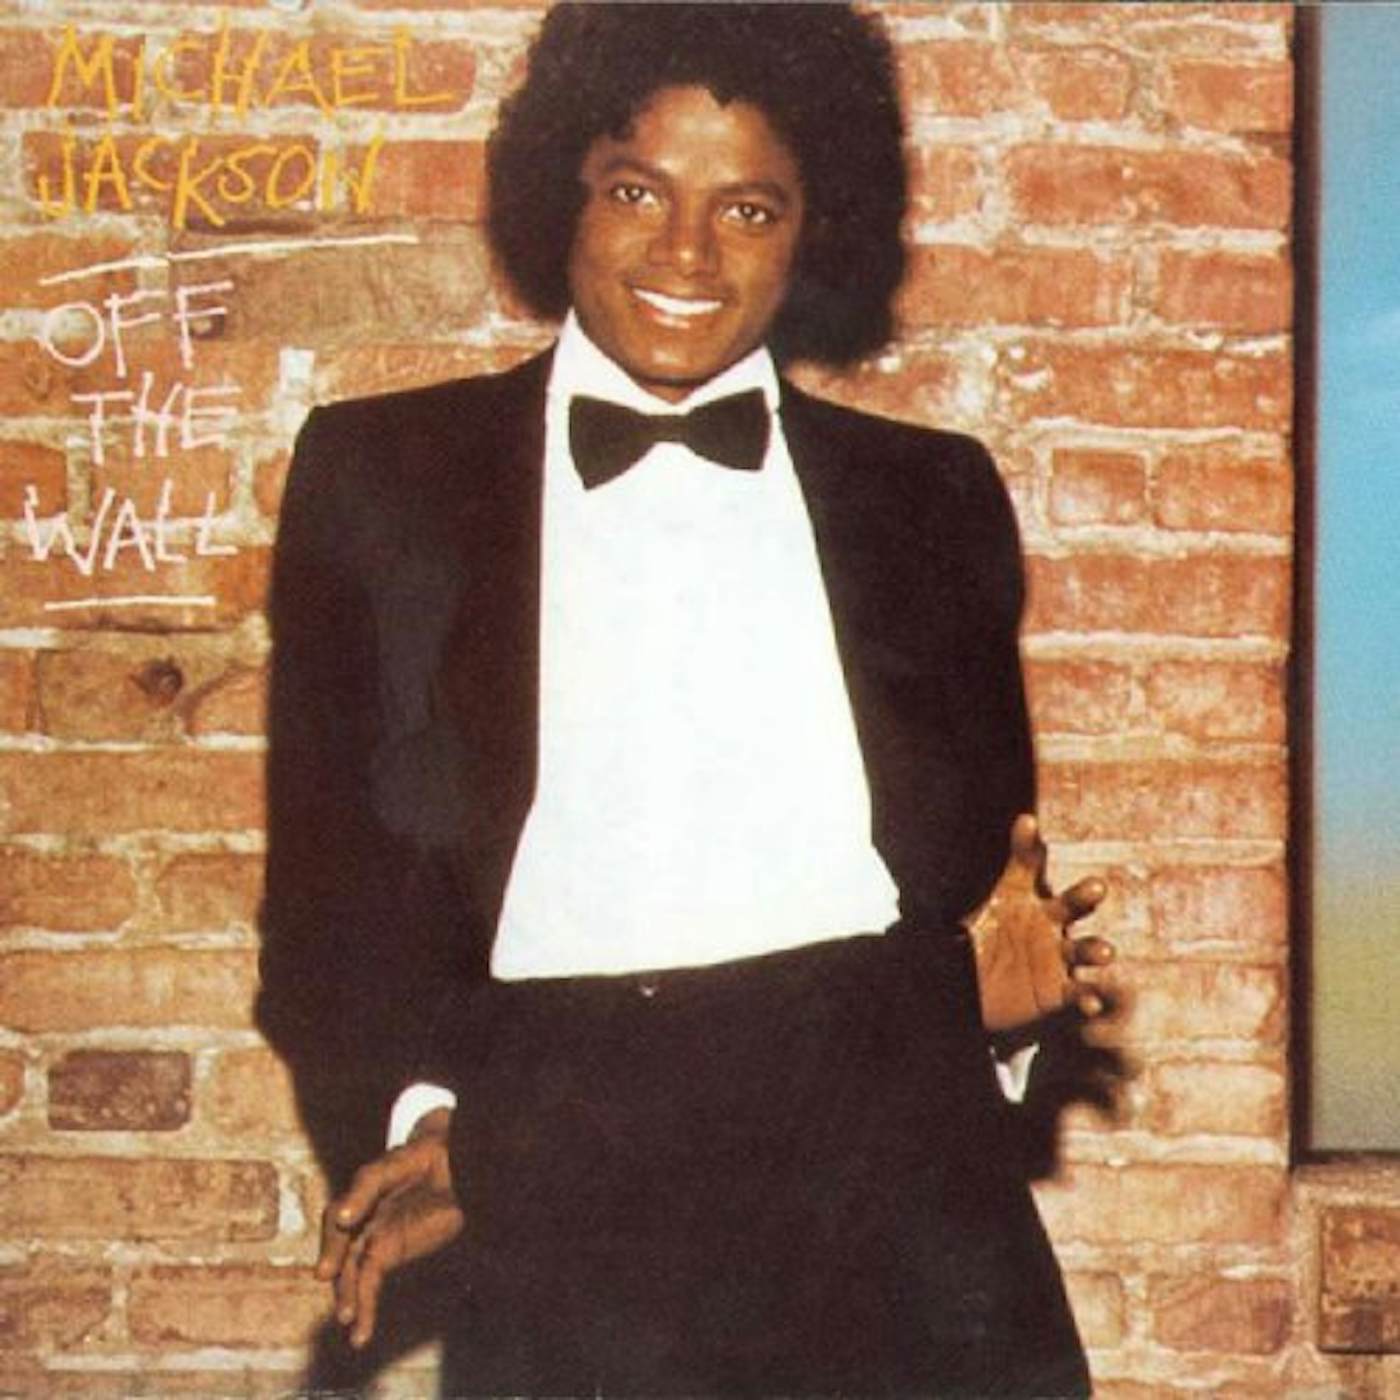 Michael Jackson Off The Wall Vinyl Record